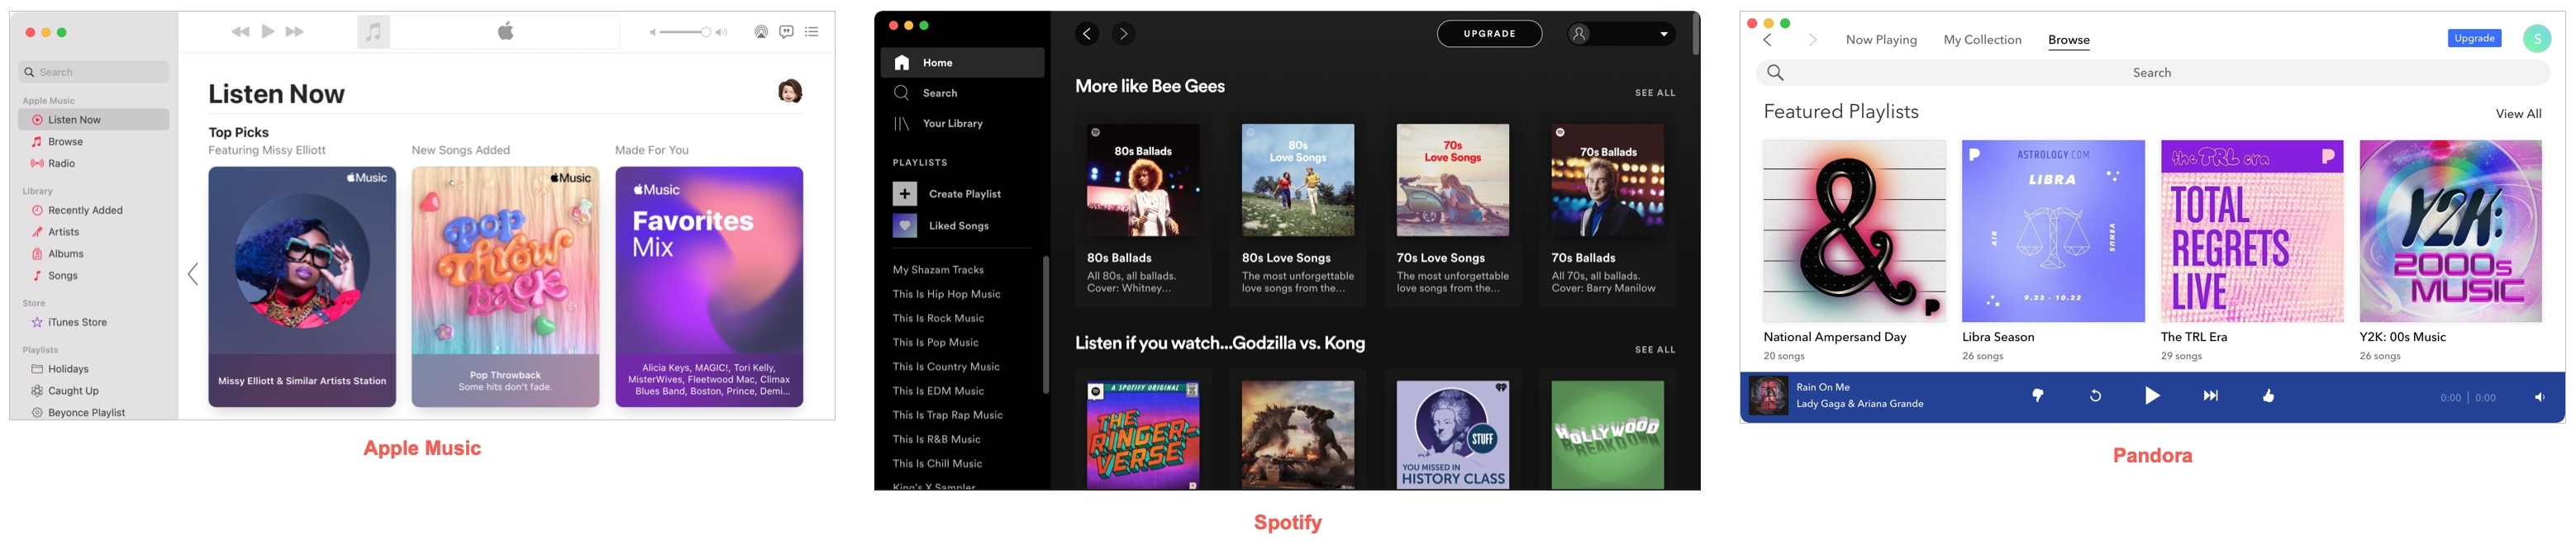 Apple Music, Spotify and Pandora on Mac